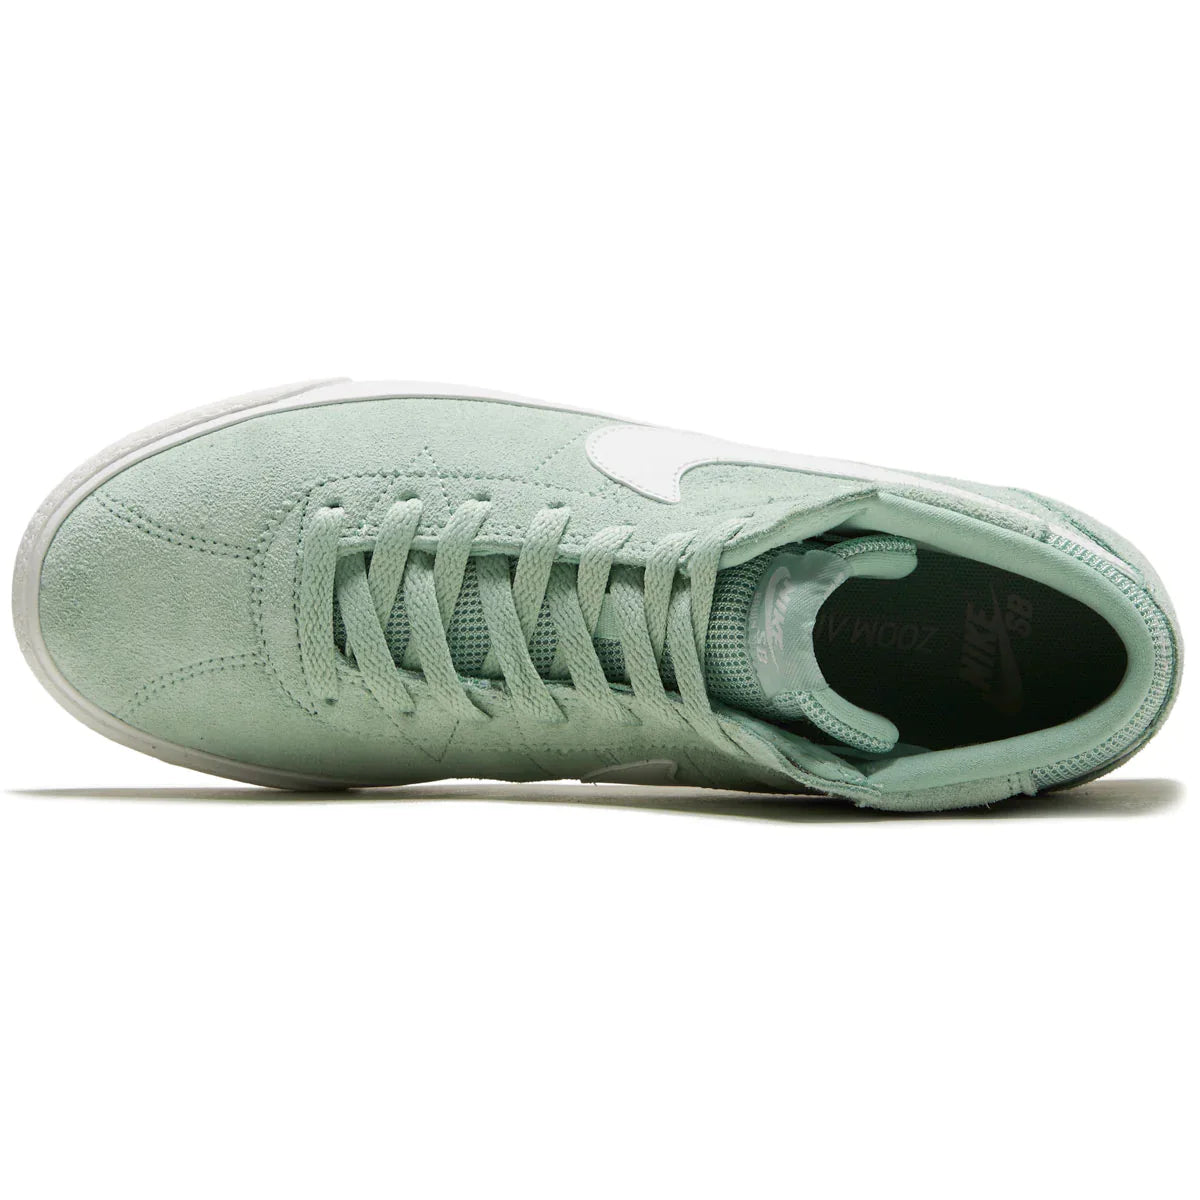 Women's Nike SB Bruin High Shoes - Enamel Green / Summit White